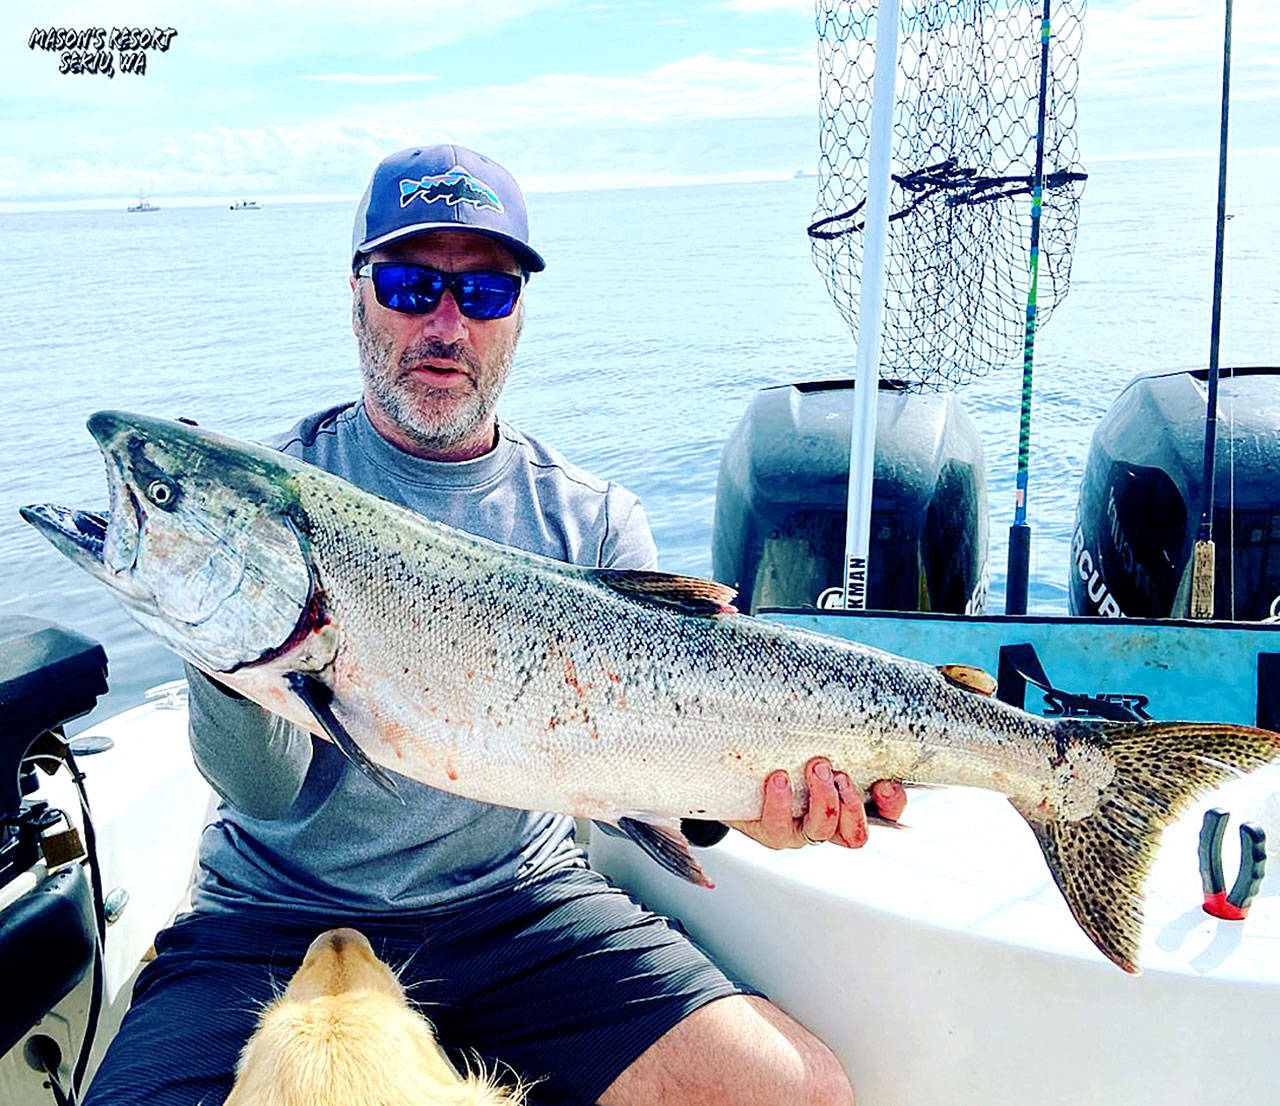 Photo courtesy of Mason’s Olson Resort Chadd Cinkovich shows off his king salmon caught last week in the Strait of Juan de Fuca.